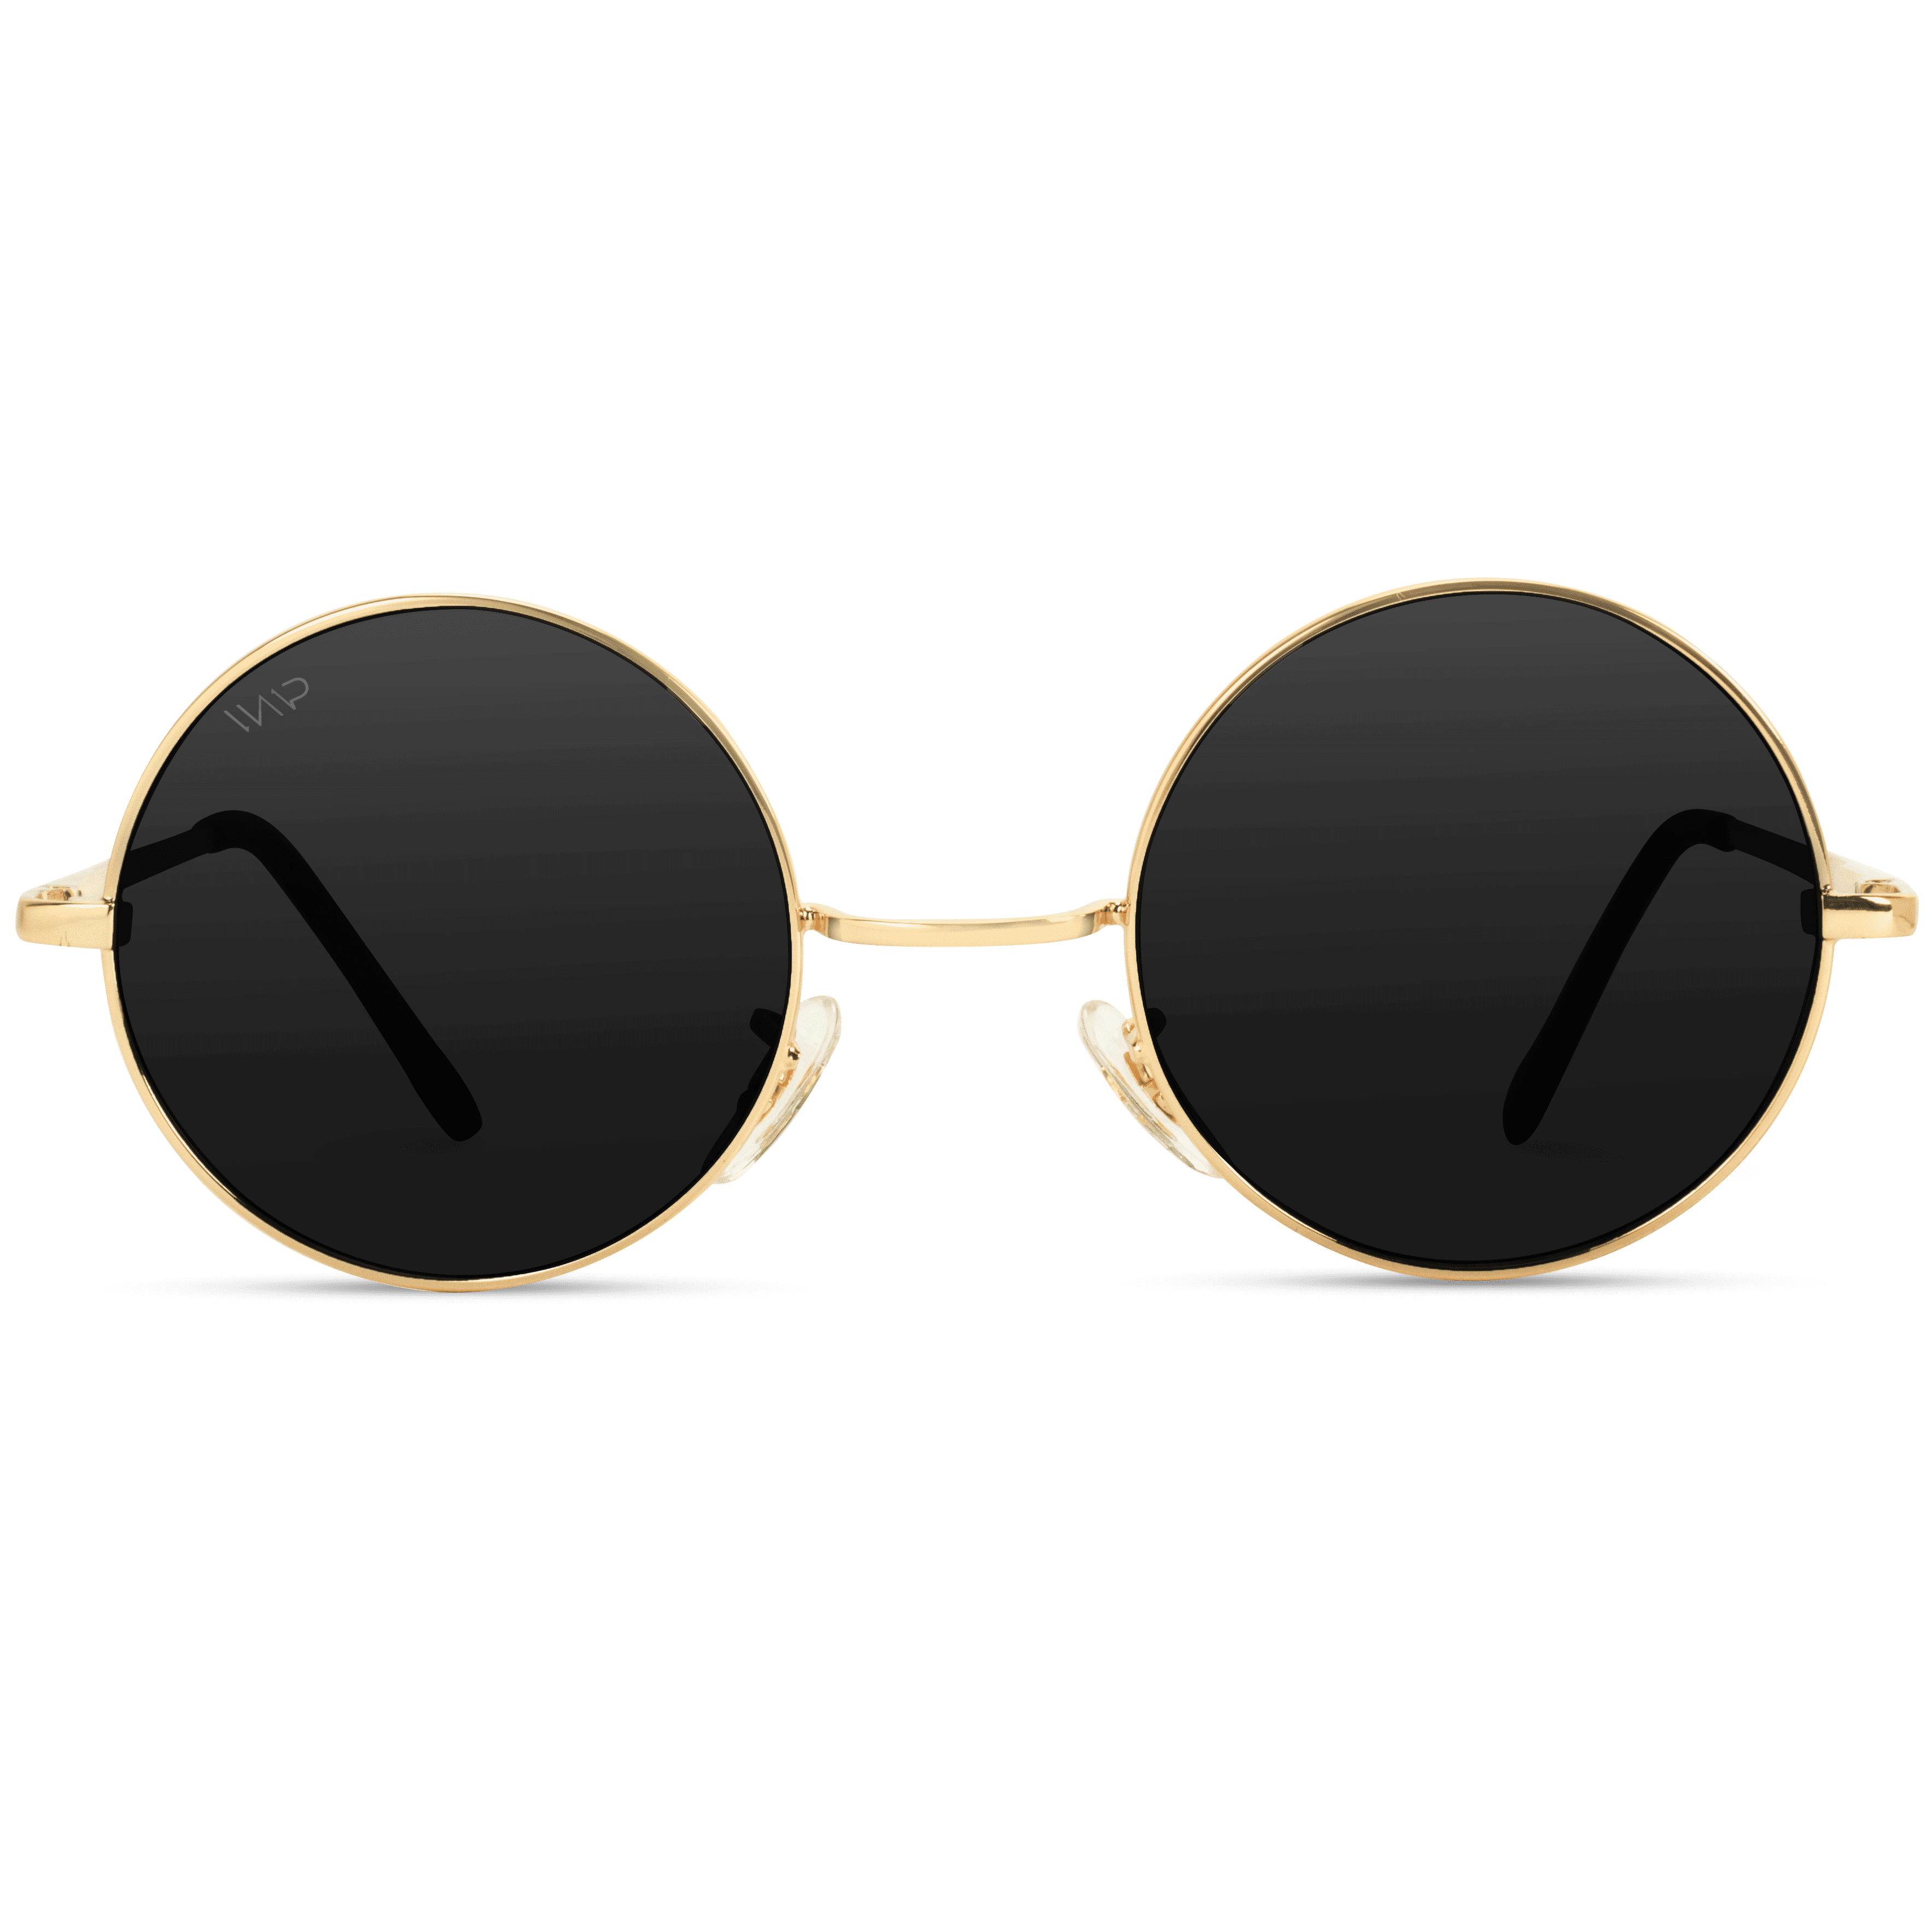 Wearme Pro New Retro Vintage Lennon Inspired Round Metal Frame Small Circle Sunglasses